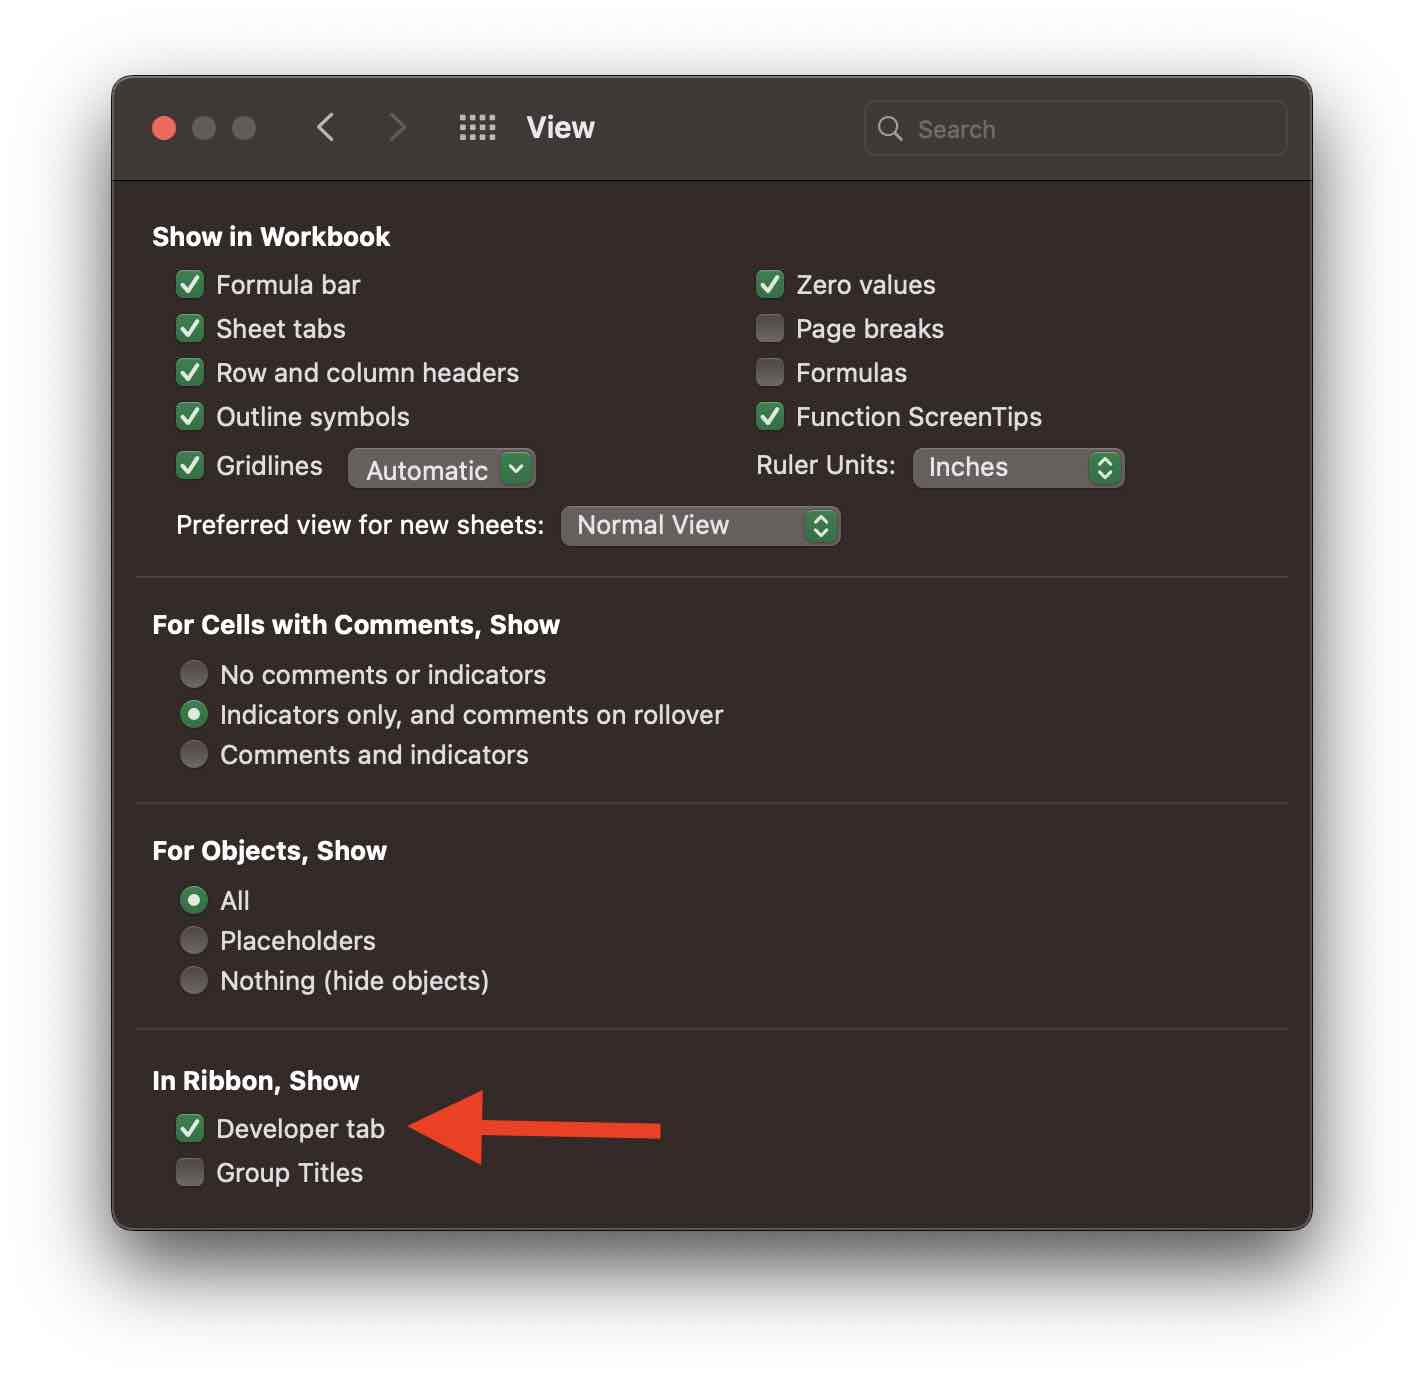 In Ribbon - Show Developer tab Option under File - Preferences on Mac